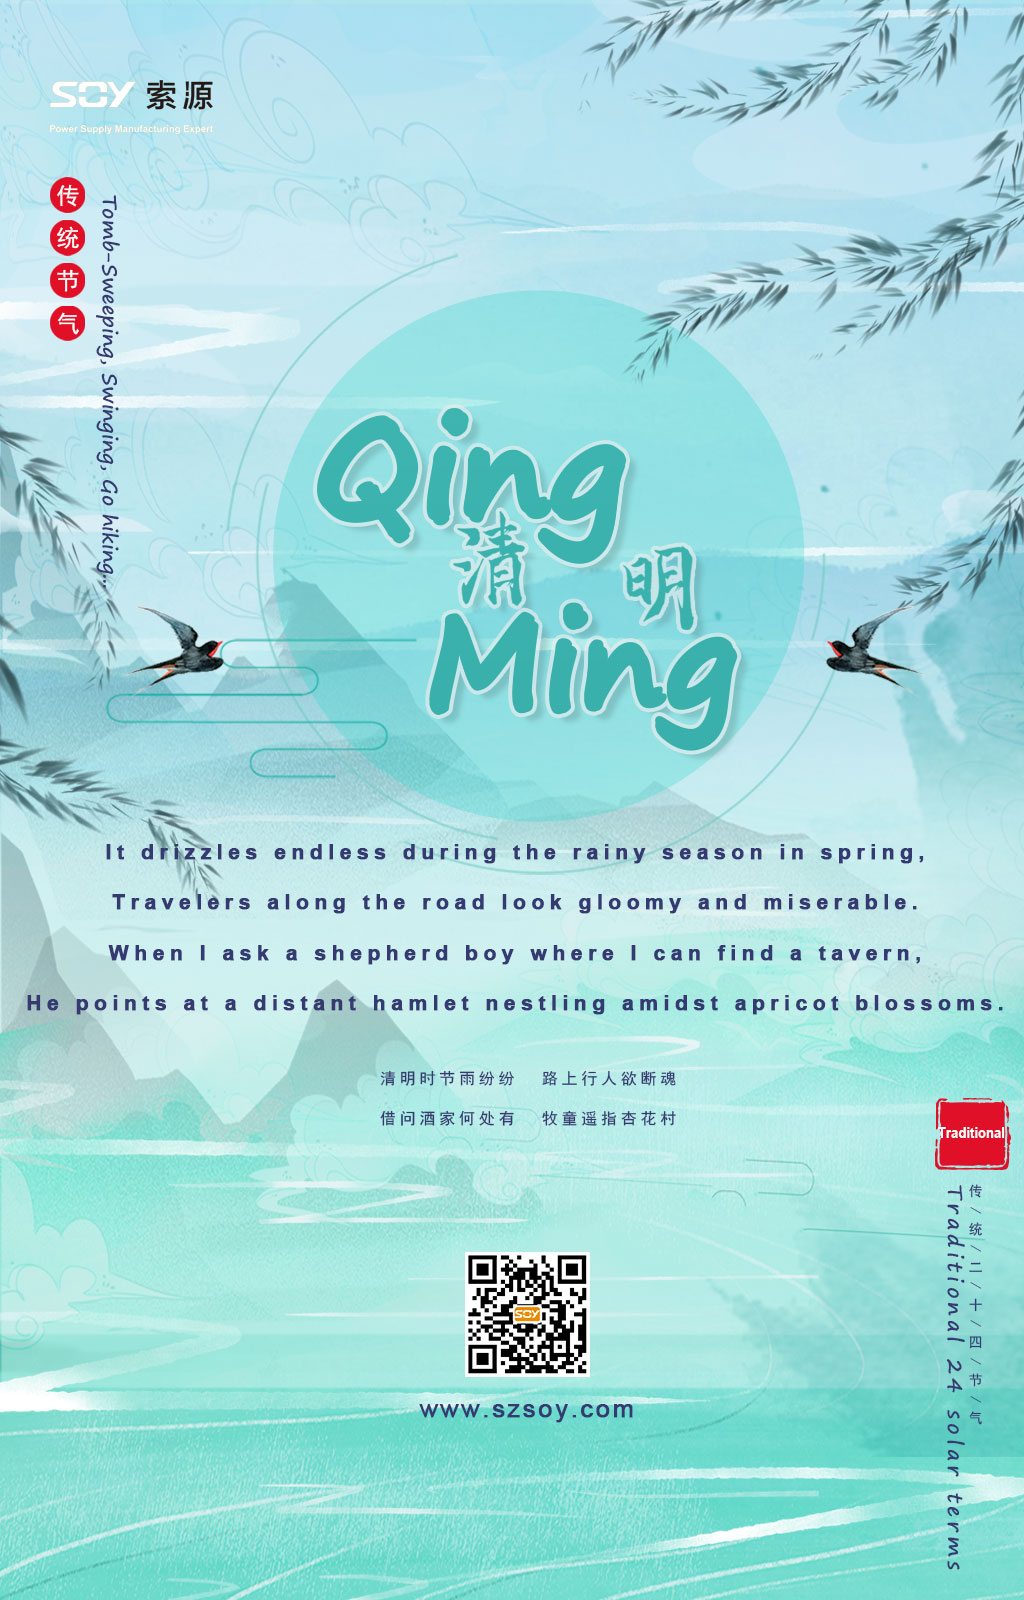 Qingming Festival 2022